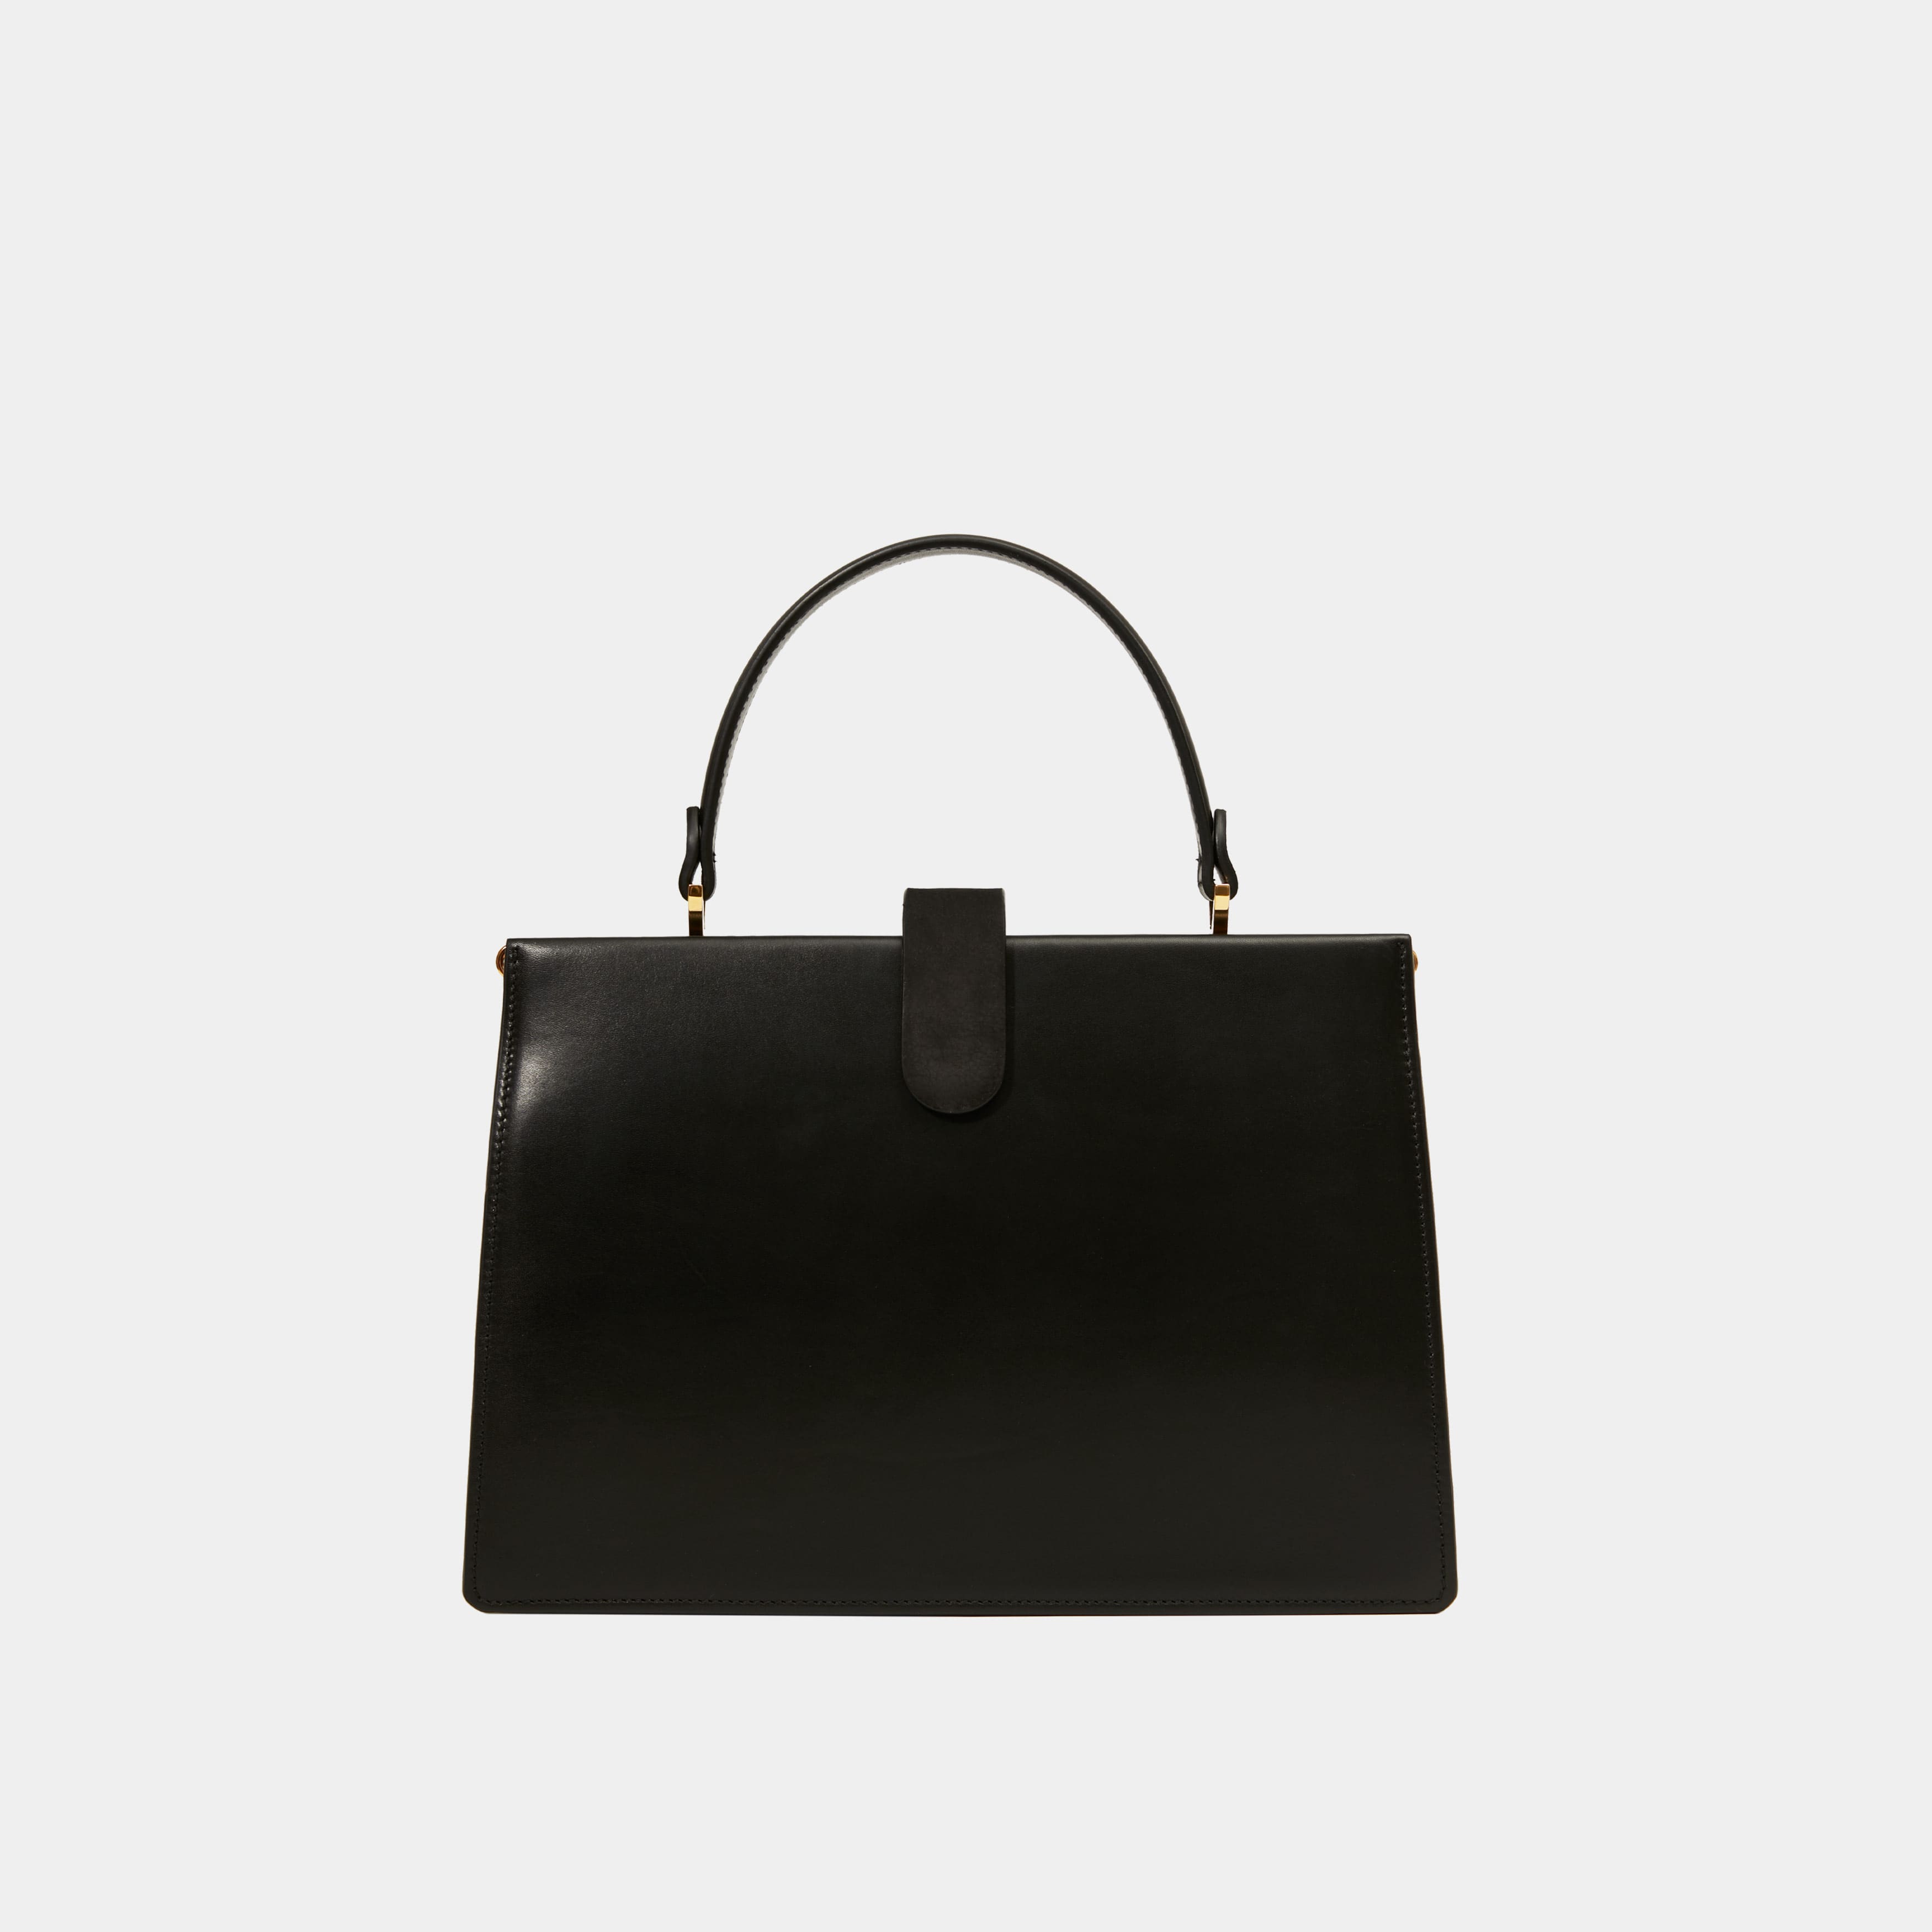 Le sac Elegant - Léo et Violette #black